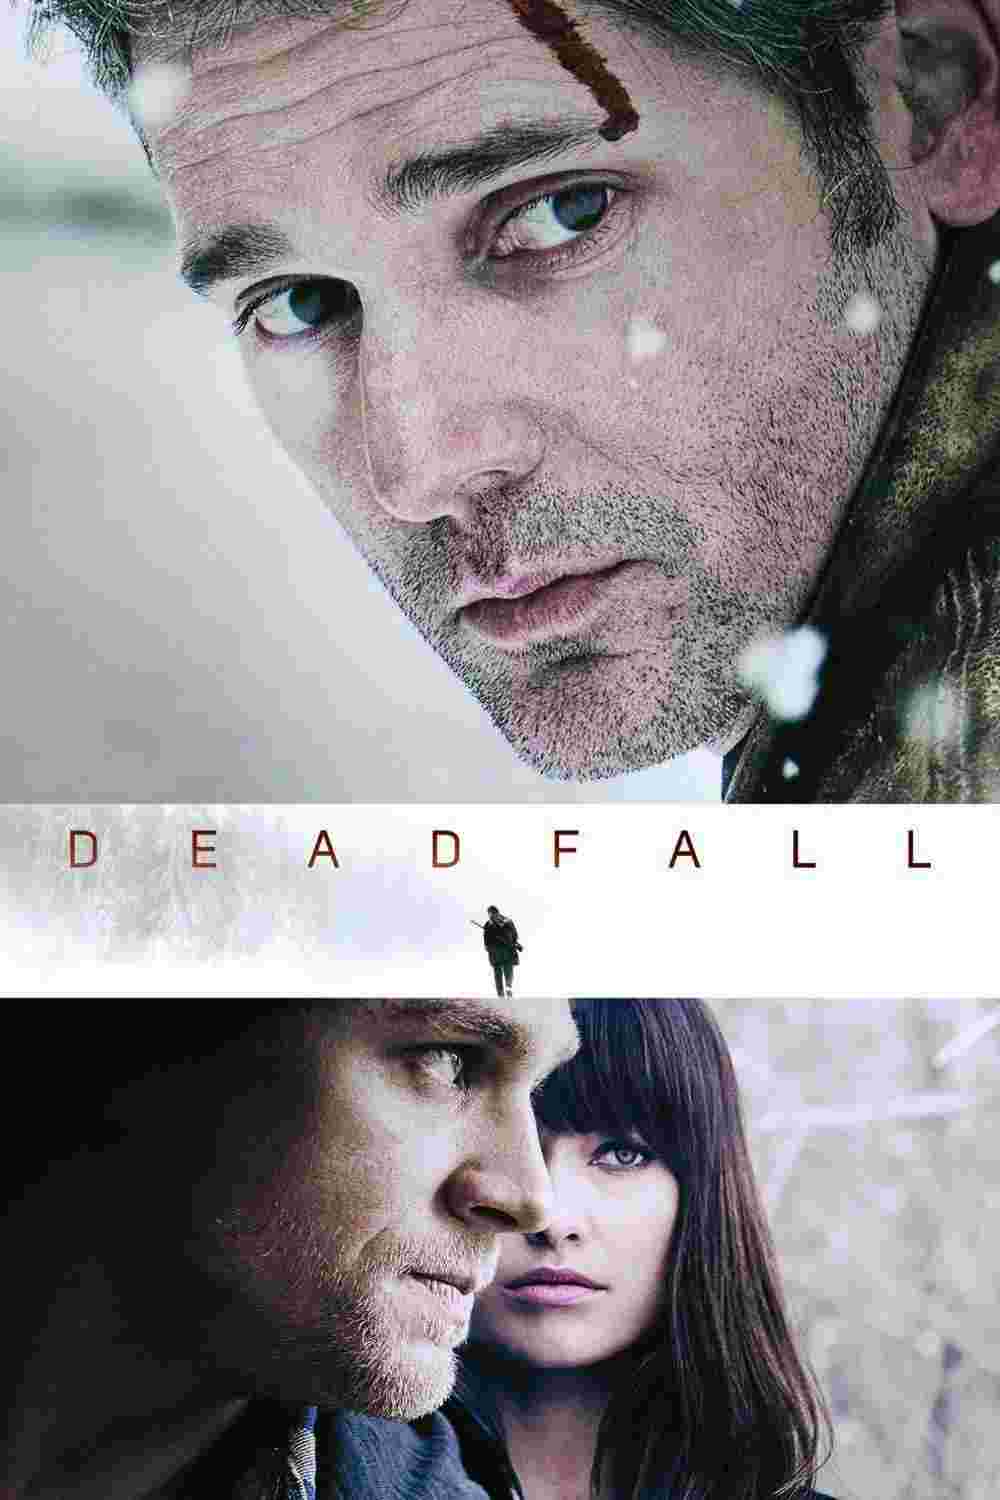 Deadfall (2012) Eric Bana